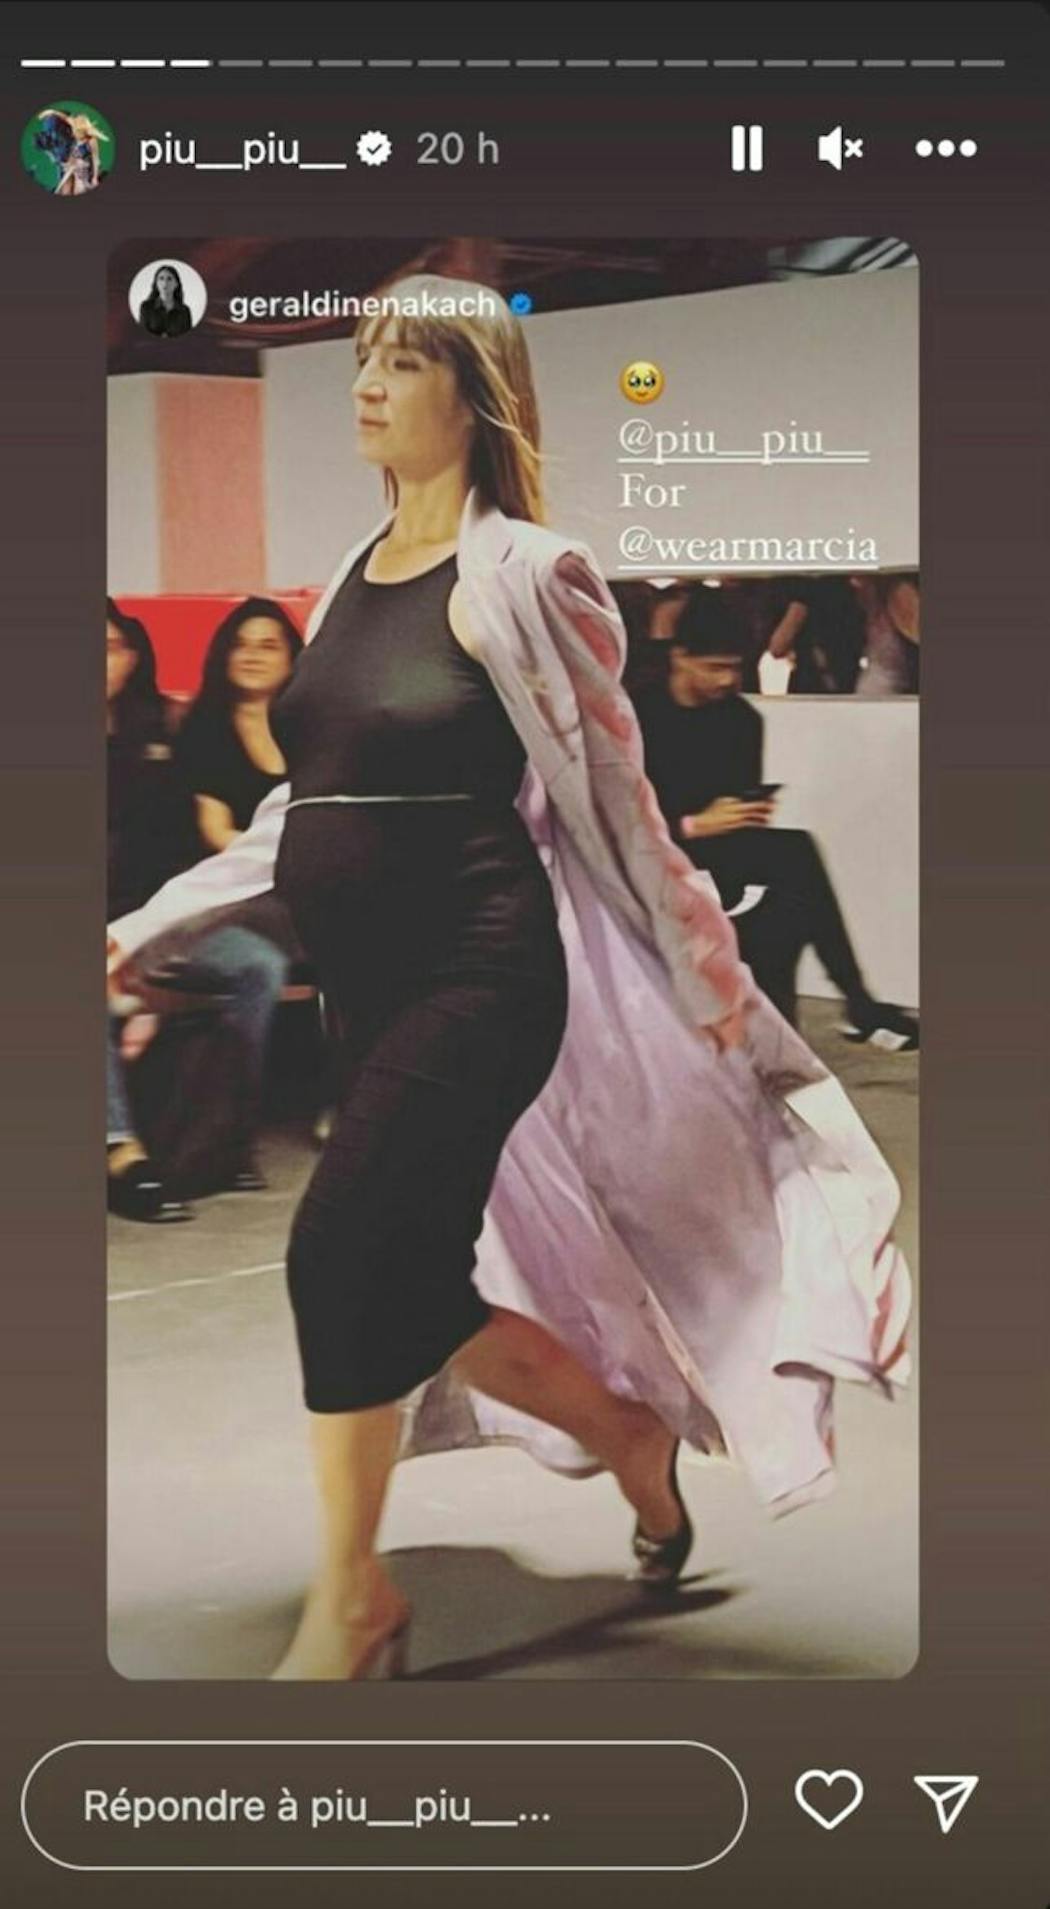 Capture Instagram de Piu Piu partageant son défilé enceinte